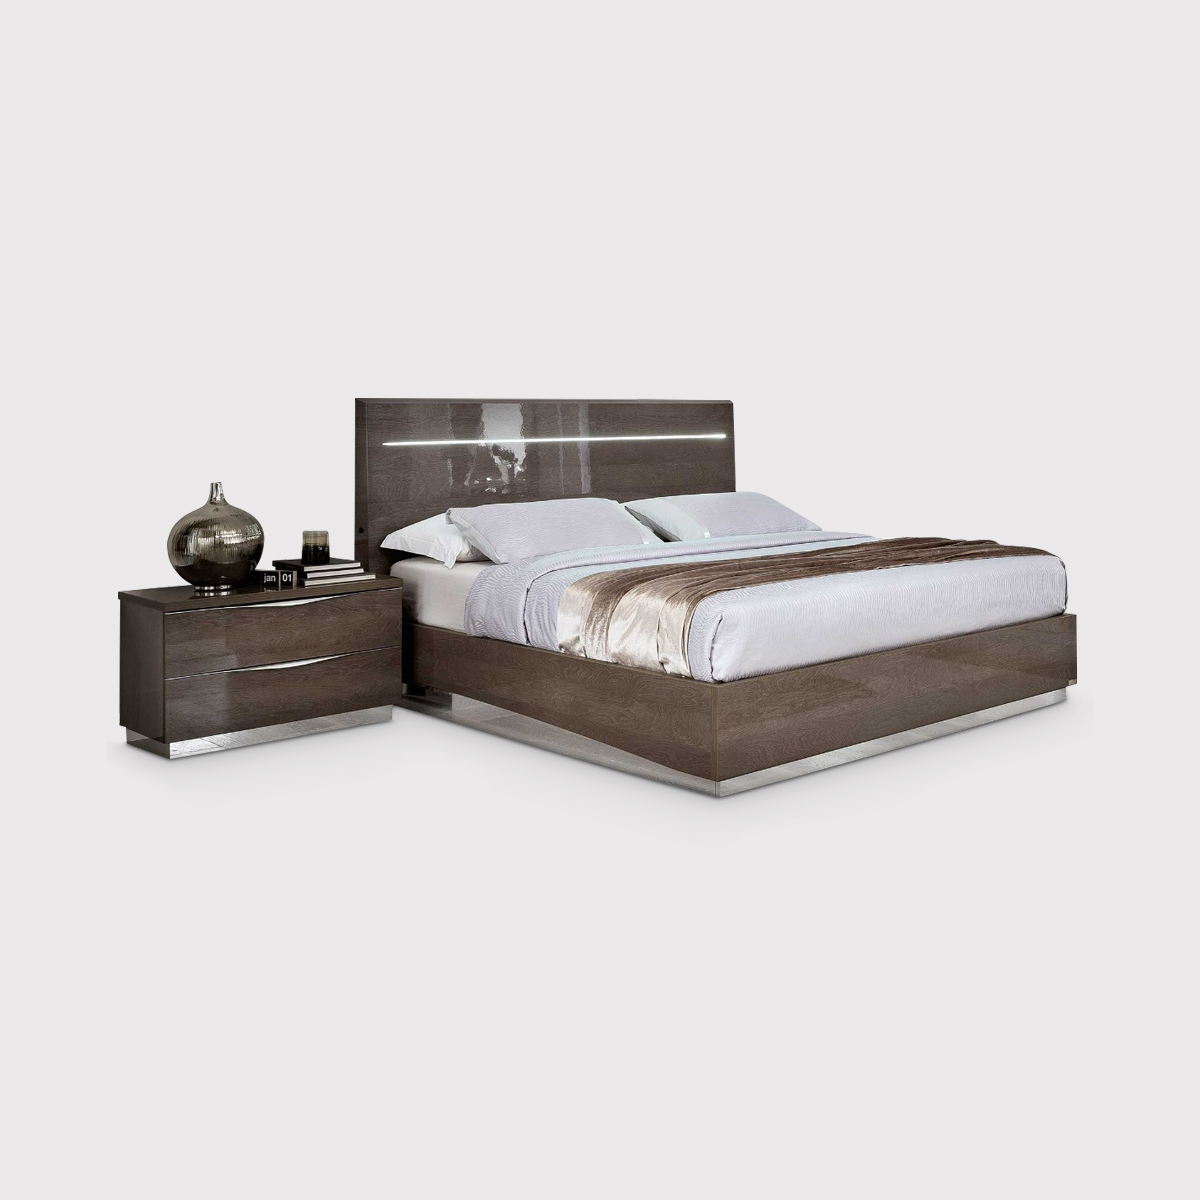 Lutyen 120cm Small Double Bed With Orthopedic Wooden Slats, Grey | W128cm | Barker & Stonehouse